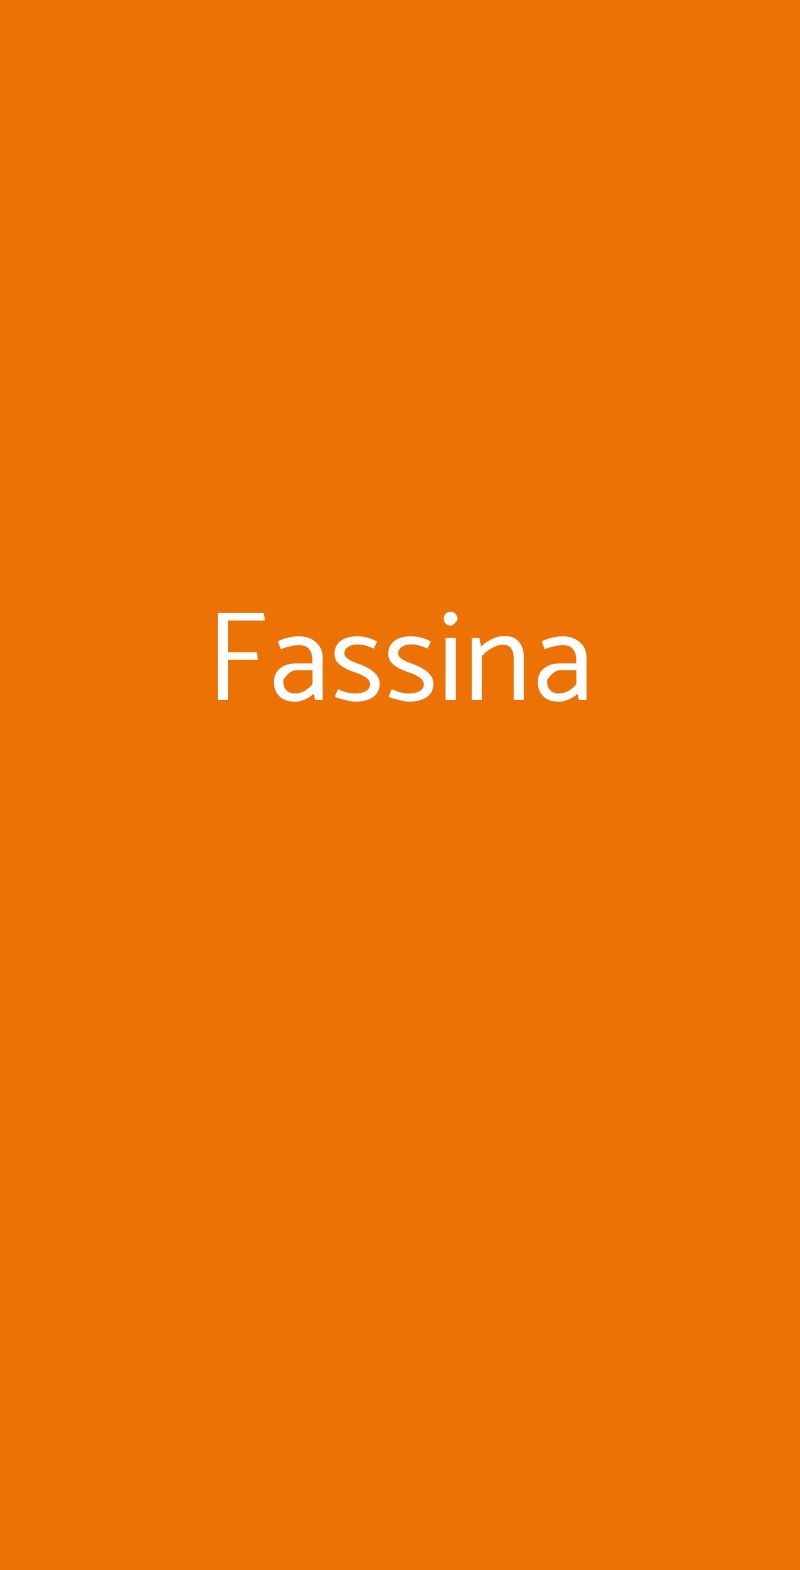 Fassina Fontanafredda menù 1 pagina